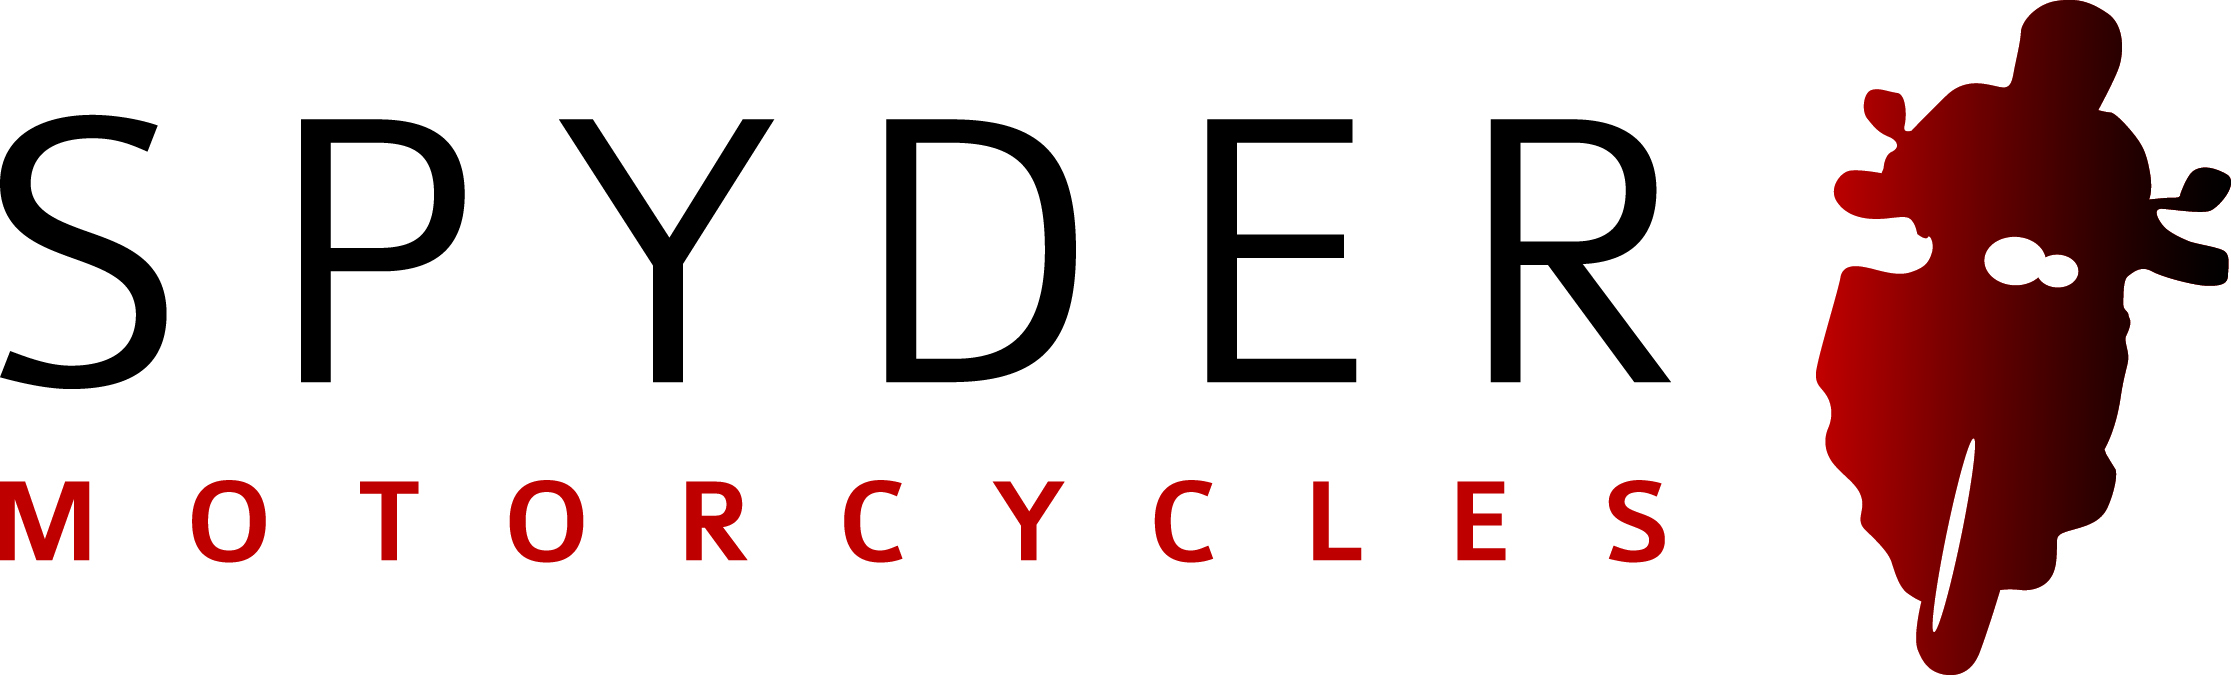 Spyder Motorcycles logo